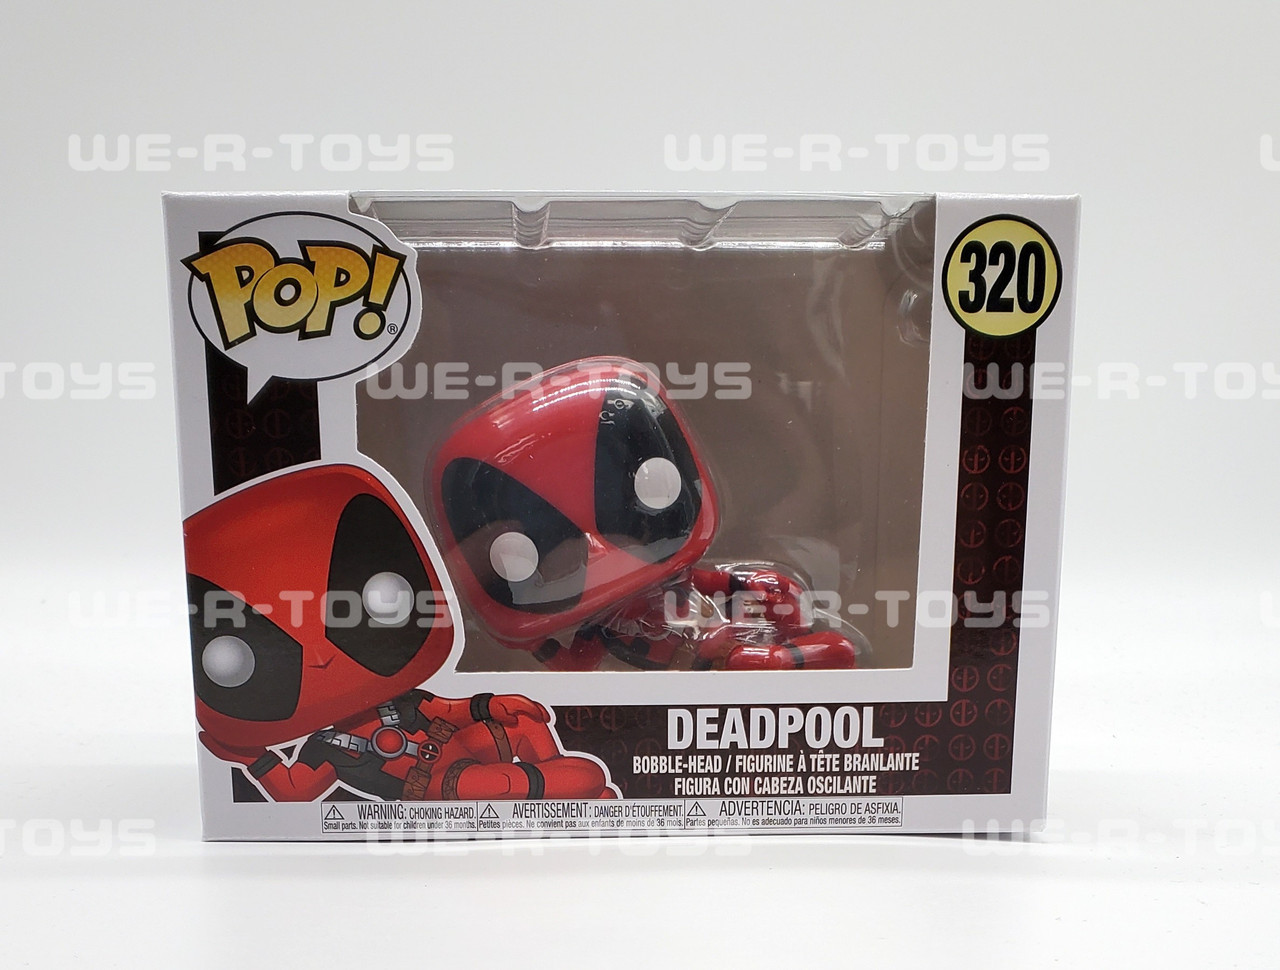 Buy Pop! Deadpool at Funko.